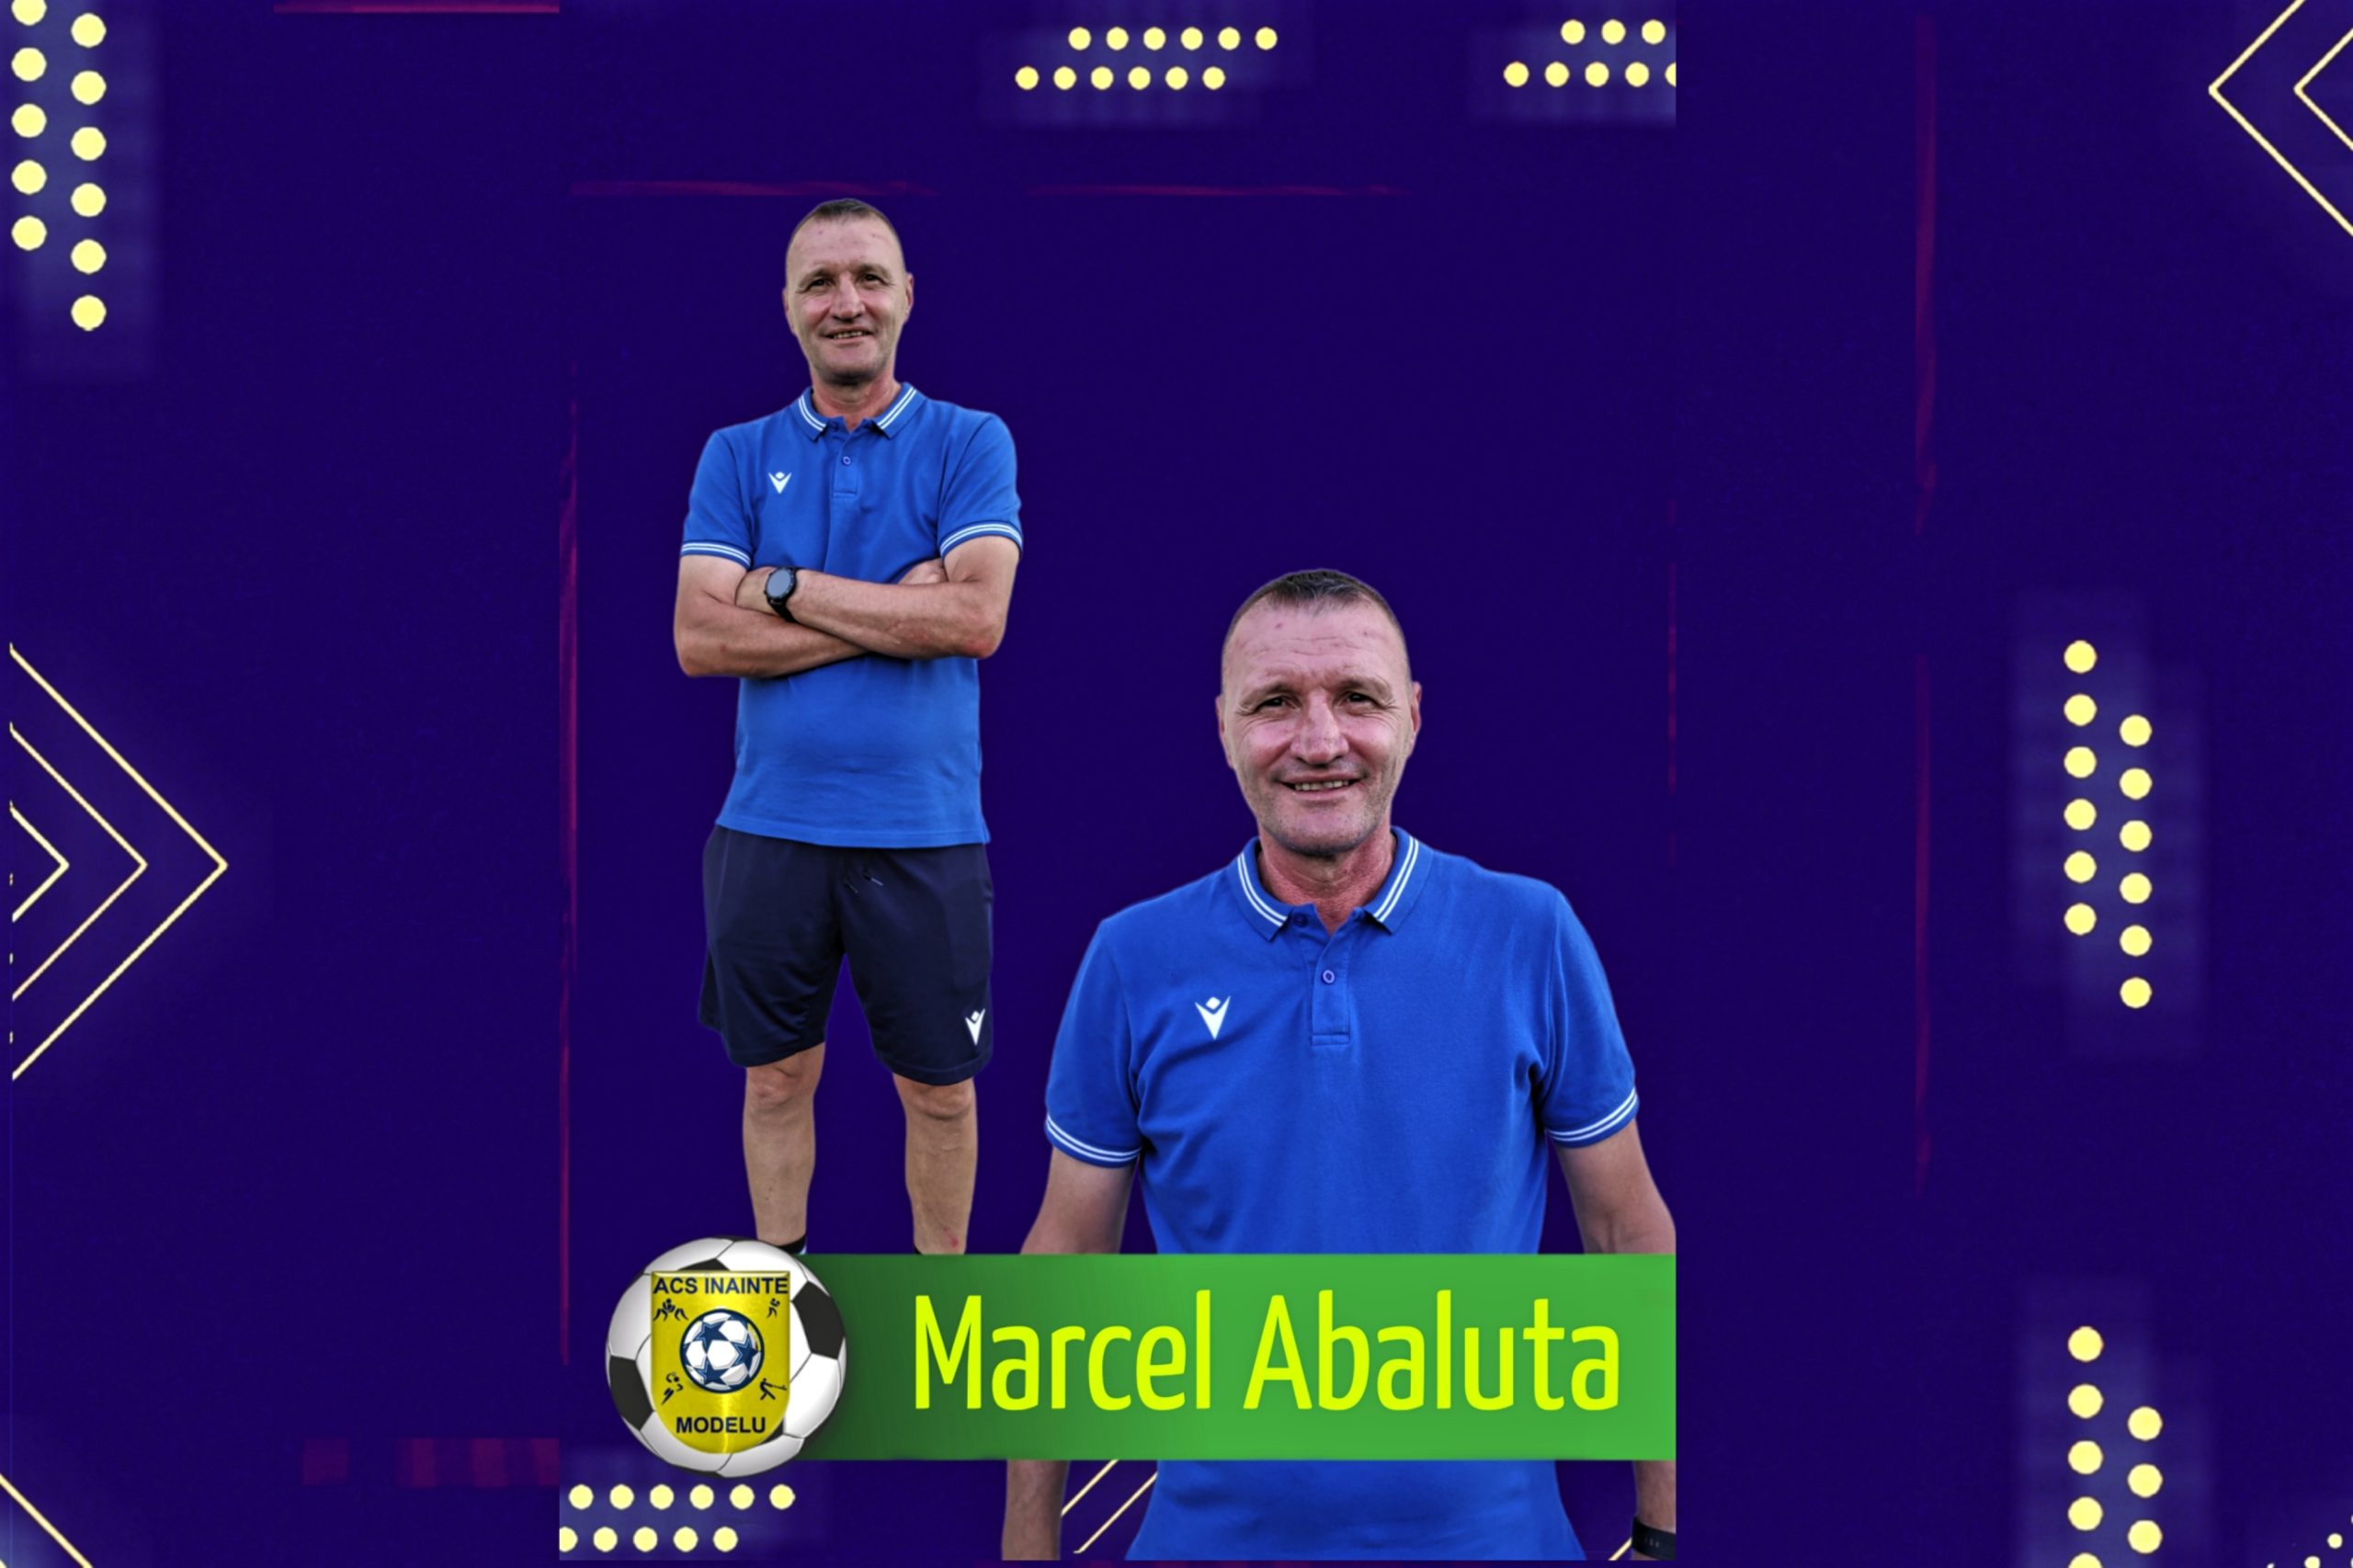 Bun venit la echipa noastra Marcel Abaluta